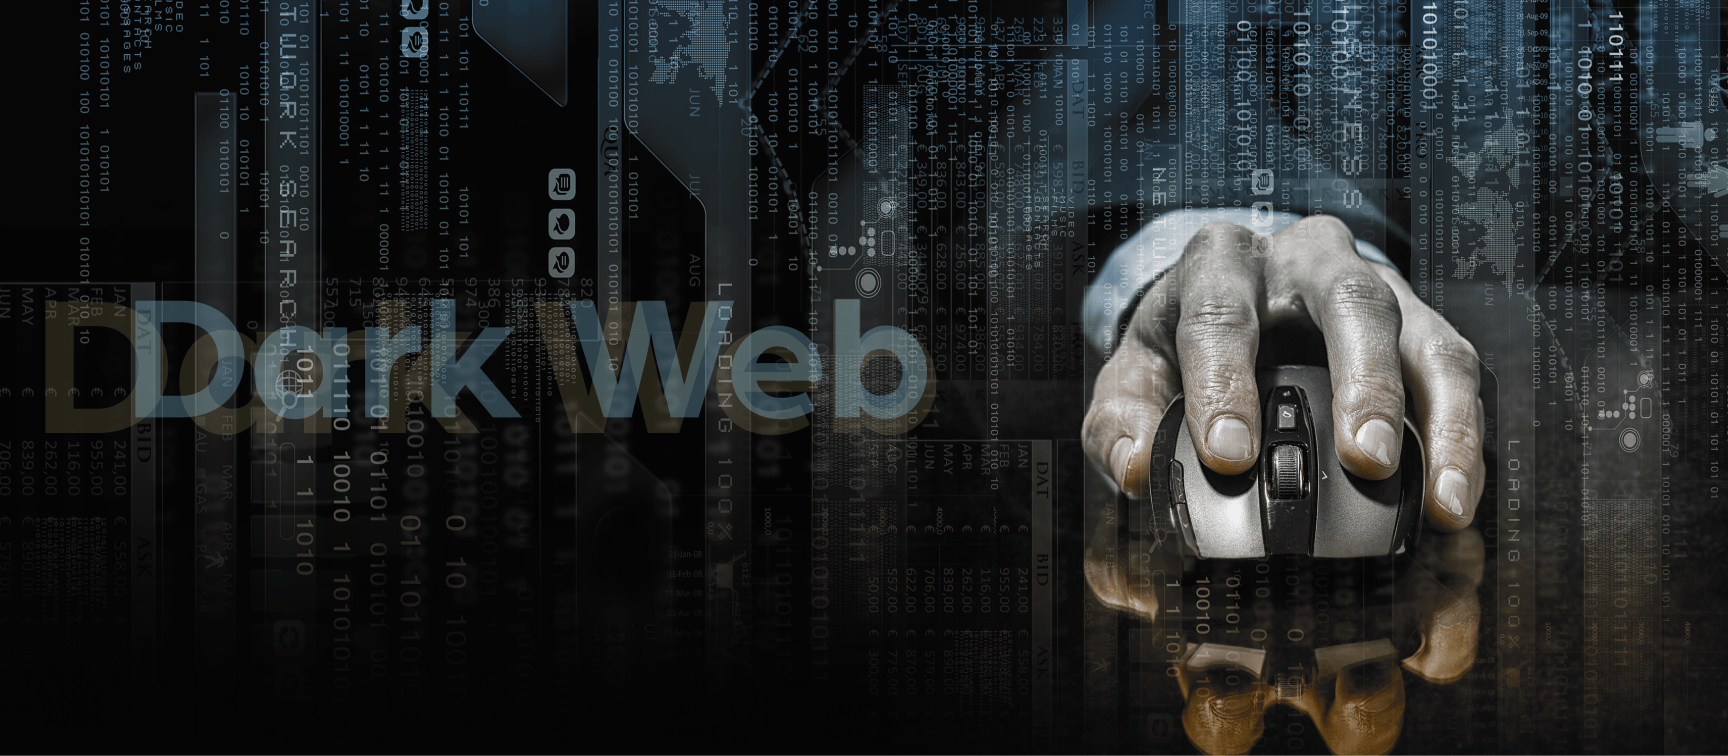 Is the Dark Web Illegal?